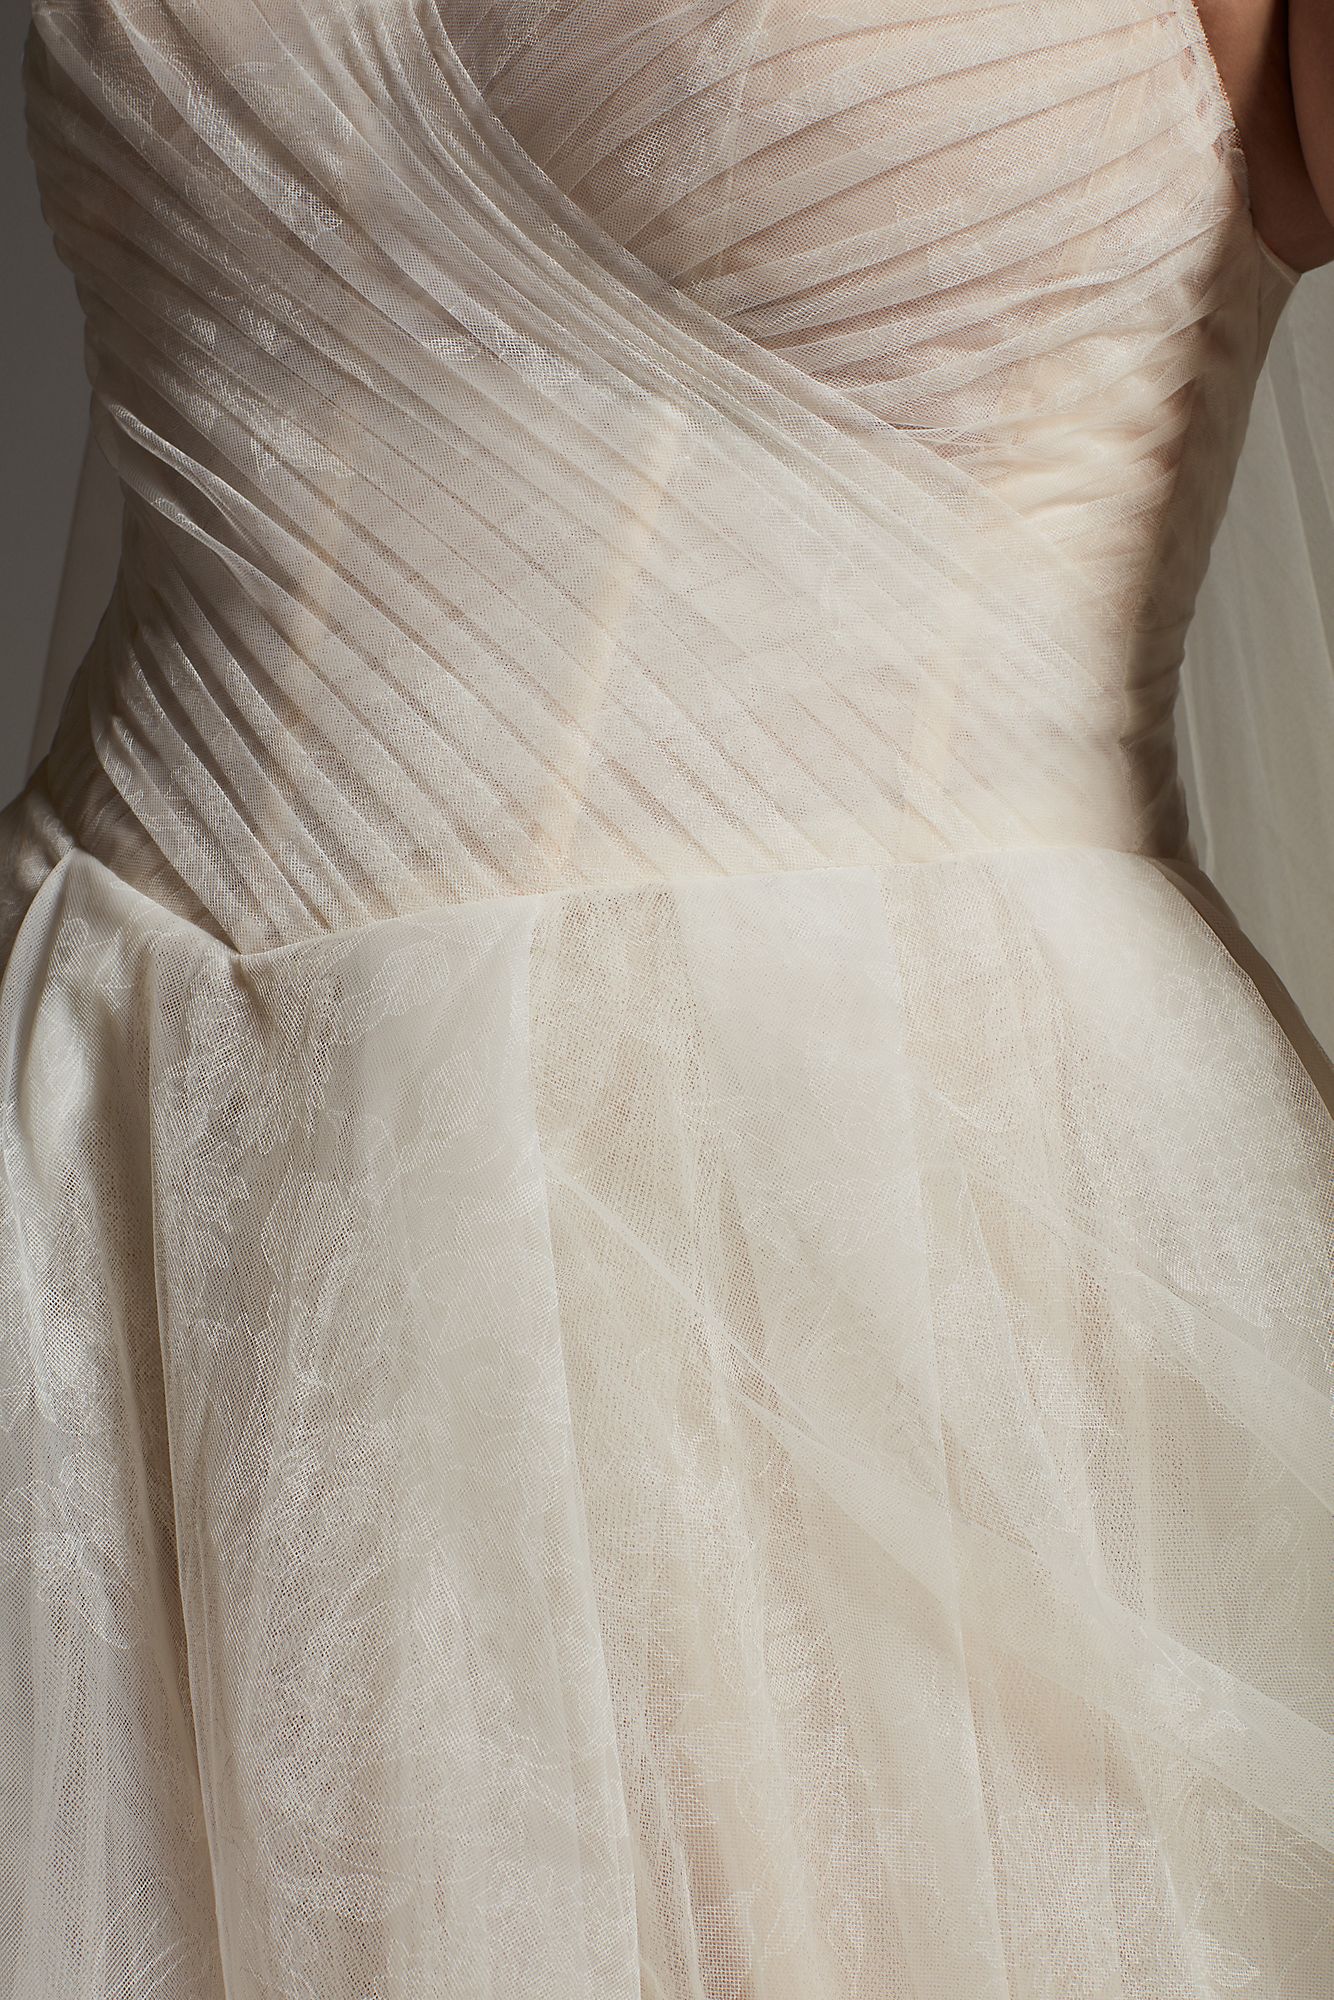 Rose Print Plus Wedding Dress style 8VW351593